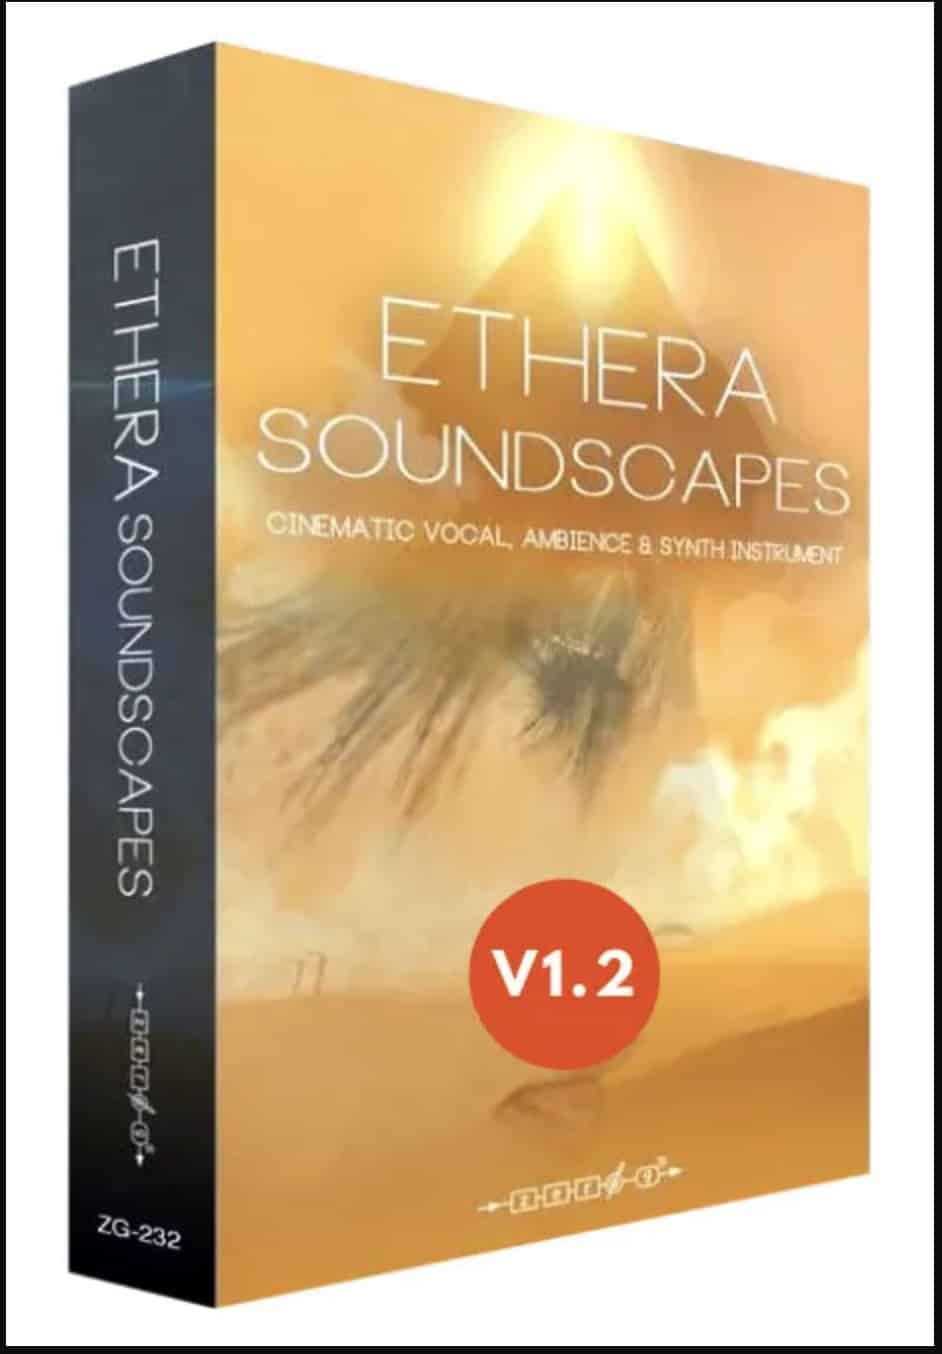 Zero G ETHERA Soundscapes V1.2